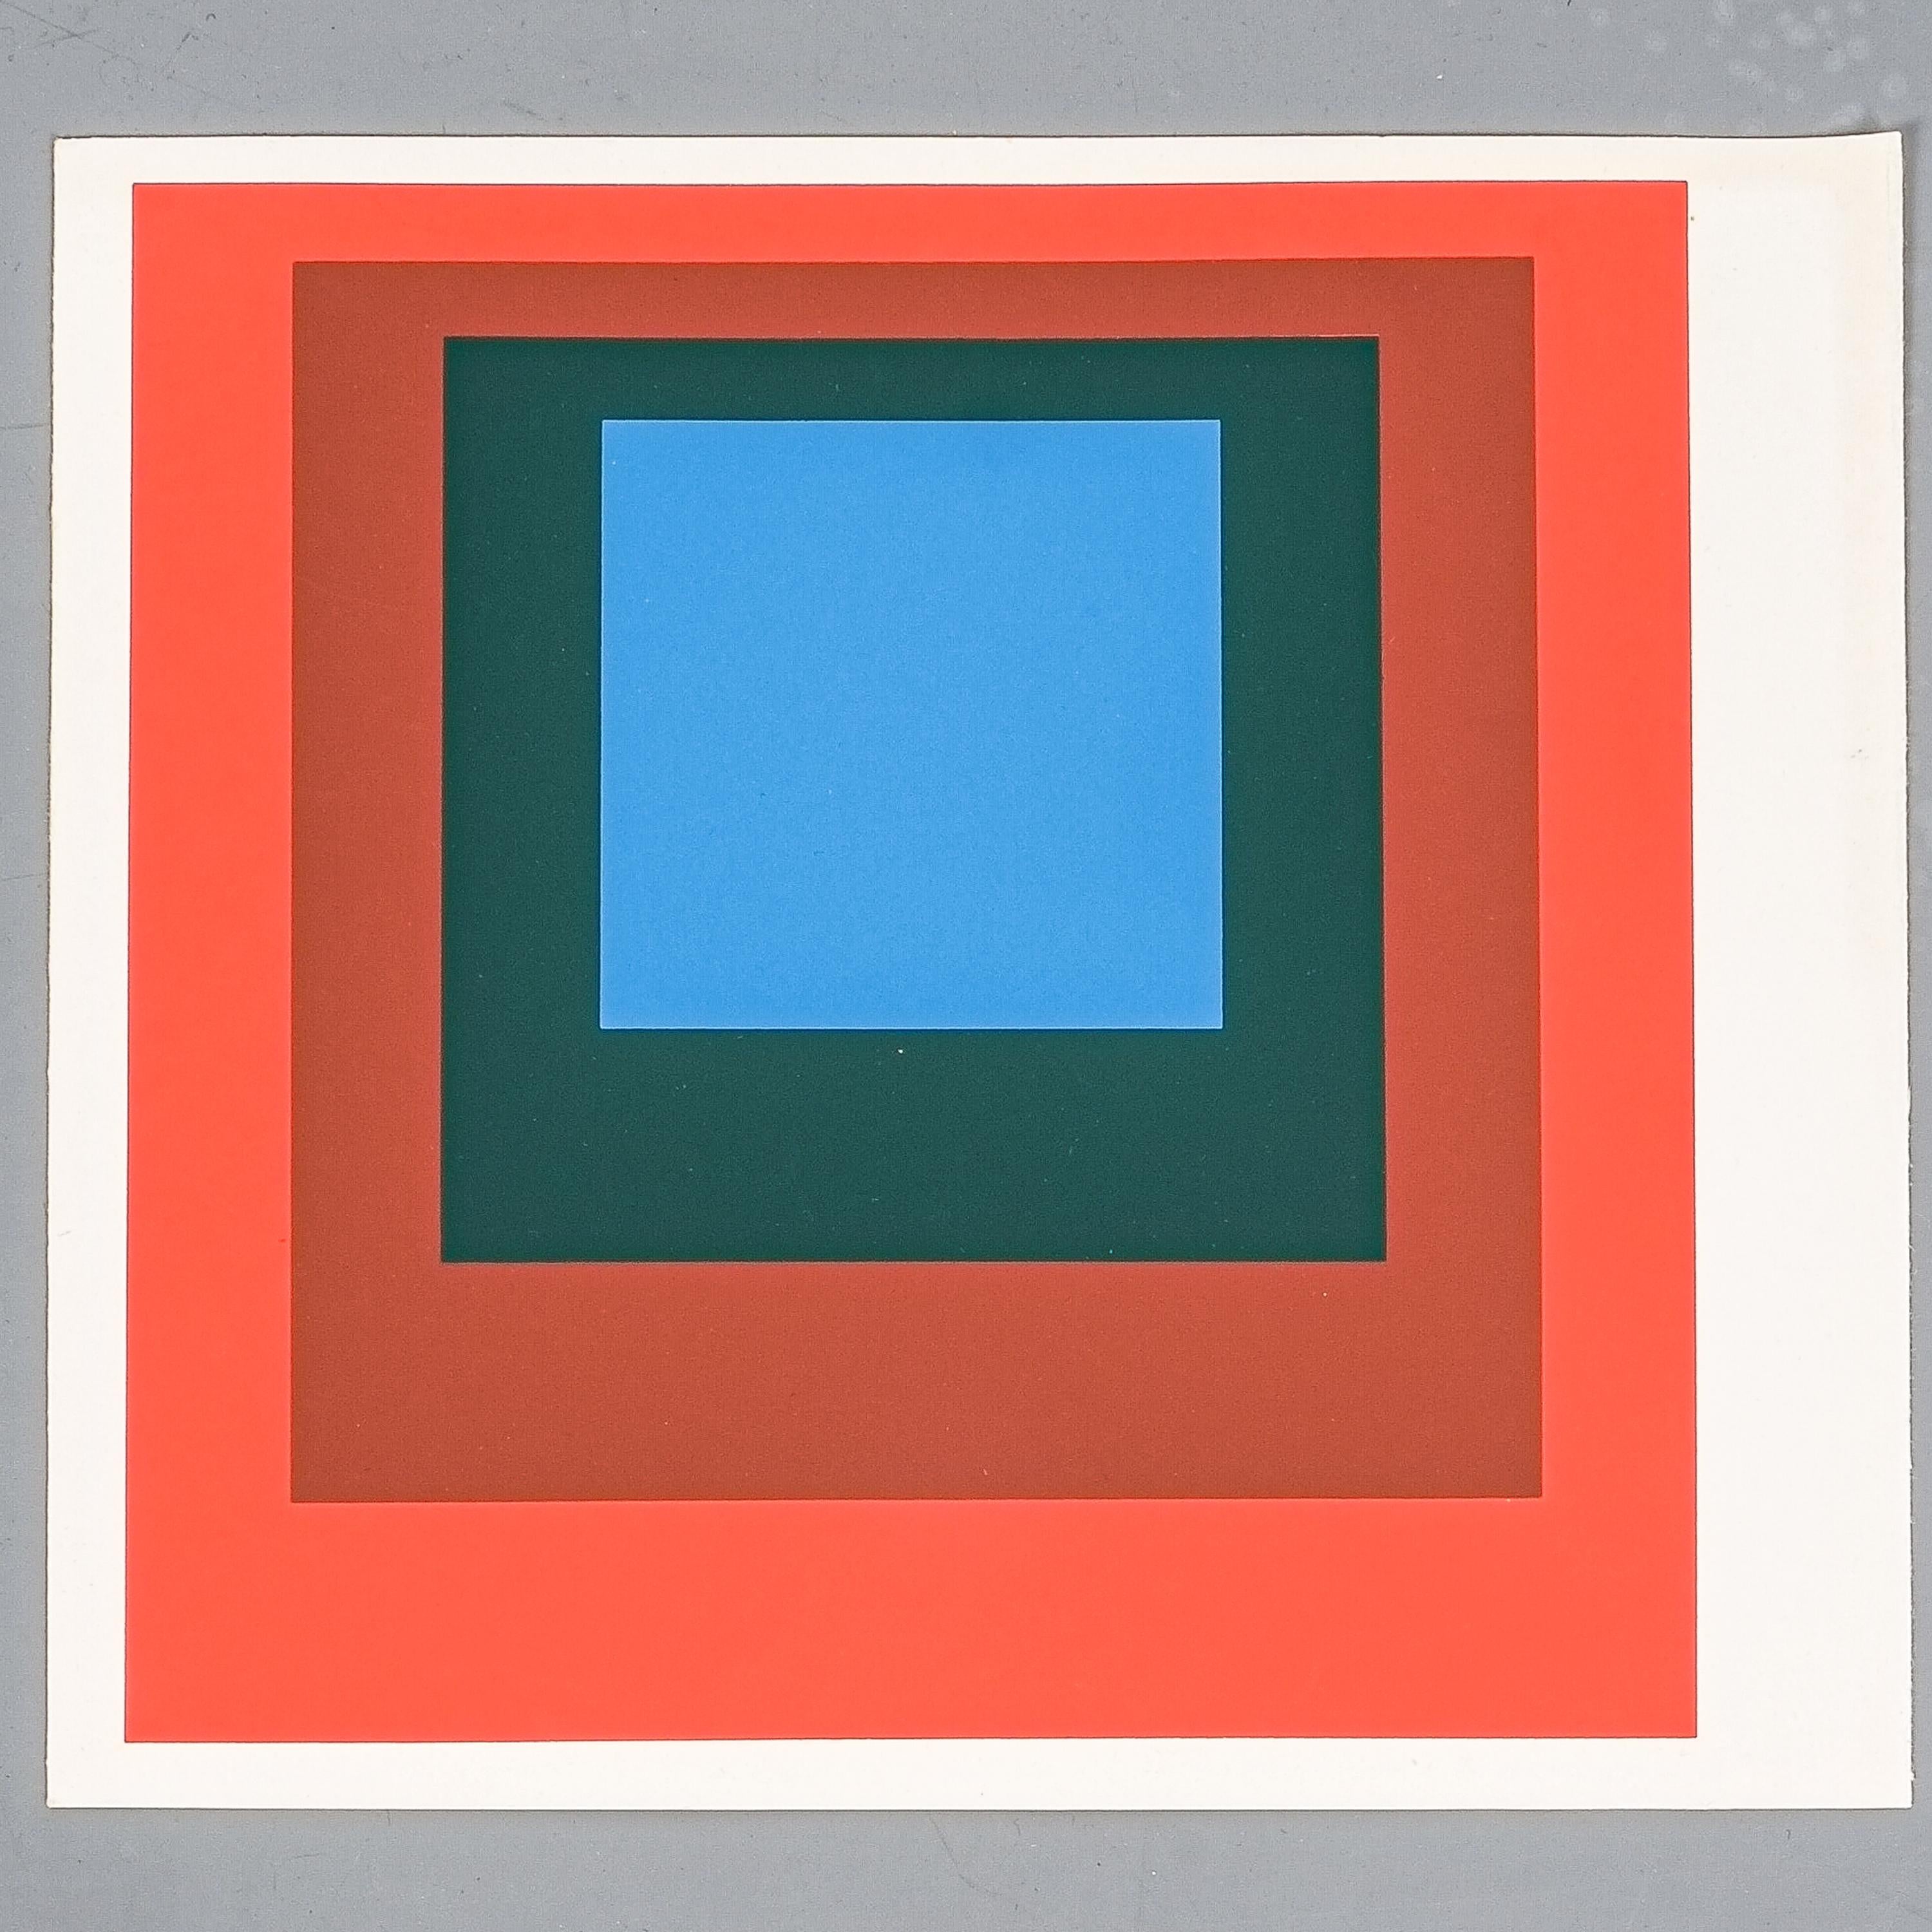 Paper 1 of 9 Screen-Prints Serigraph after Josef Albers, 1977